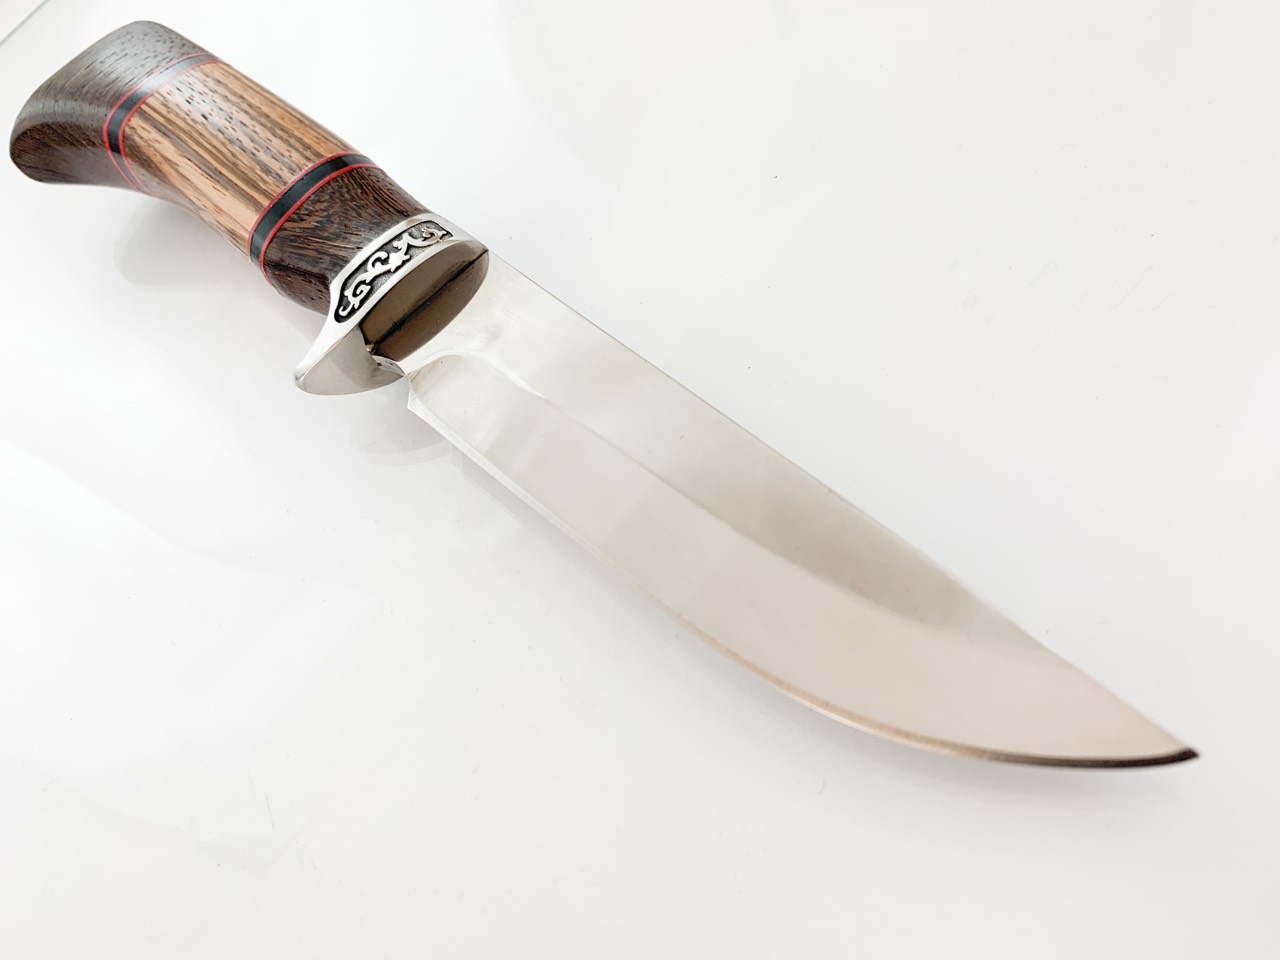 Великолепен ловен нож с метален гард инкрустиран с флорални елементи и надпис - Лев